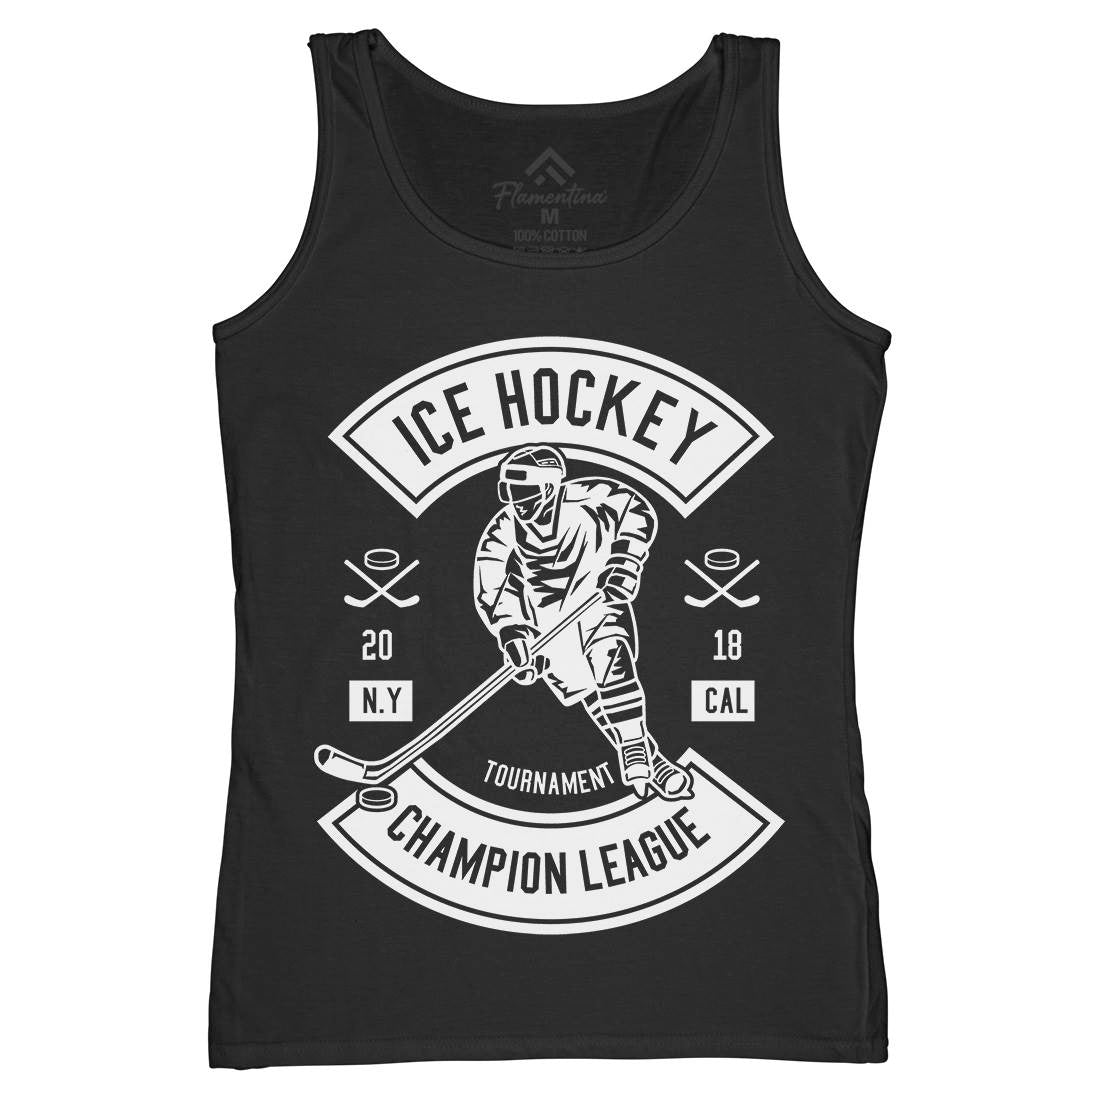 Ice Hockey Champion League Womens Organic Tank Top Vest Sport B564